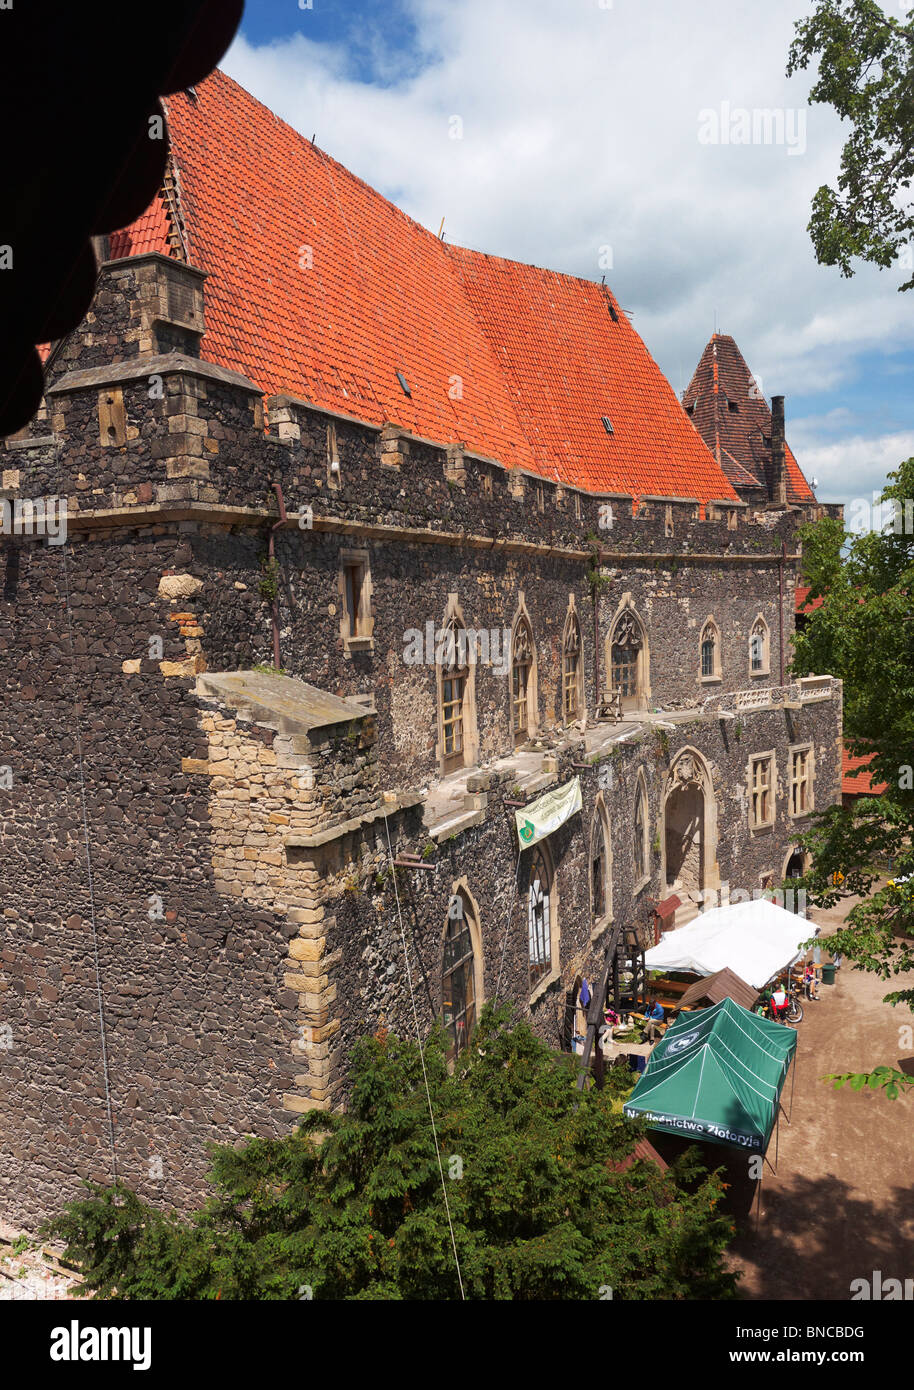 Grodziec - Medieval castle ruins, Silesia, Poland Stock Photo